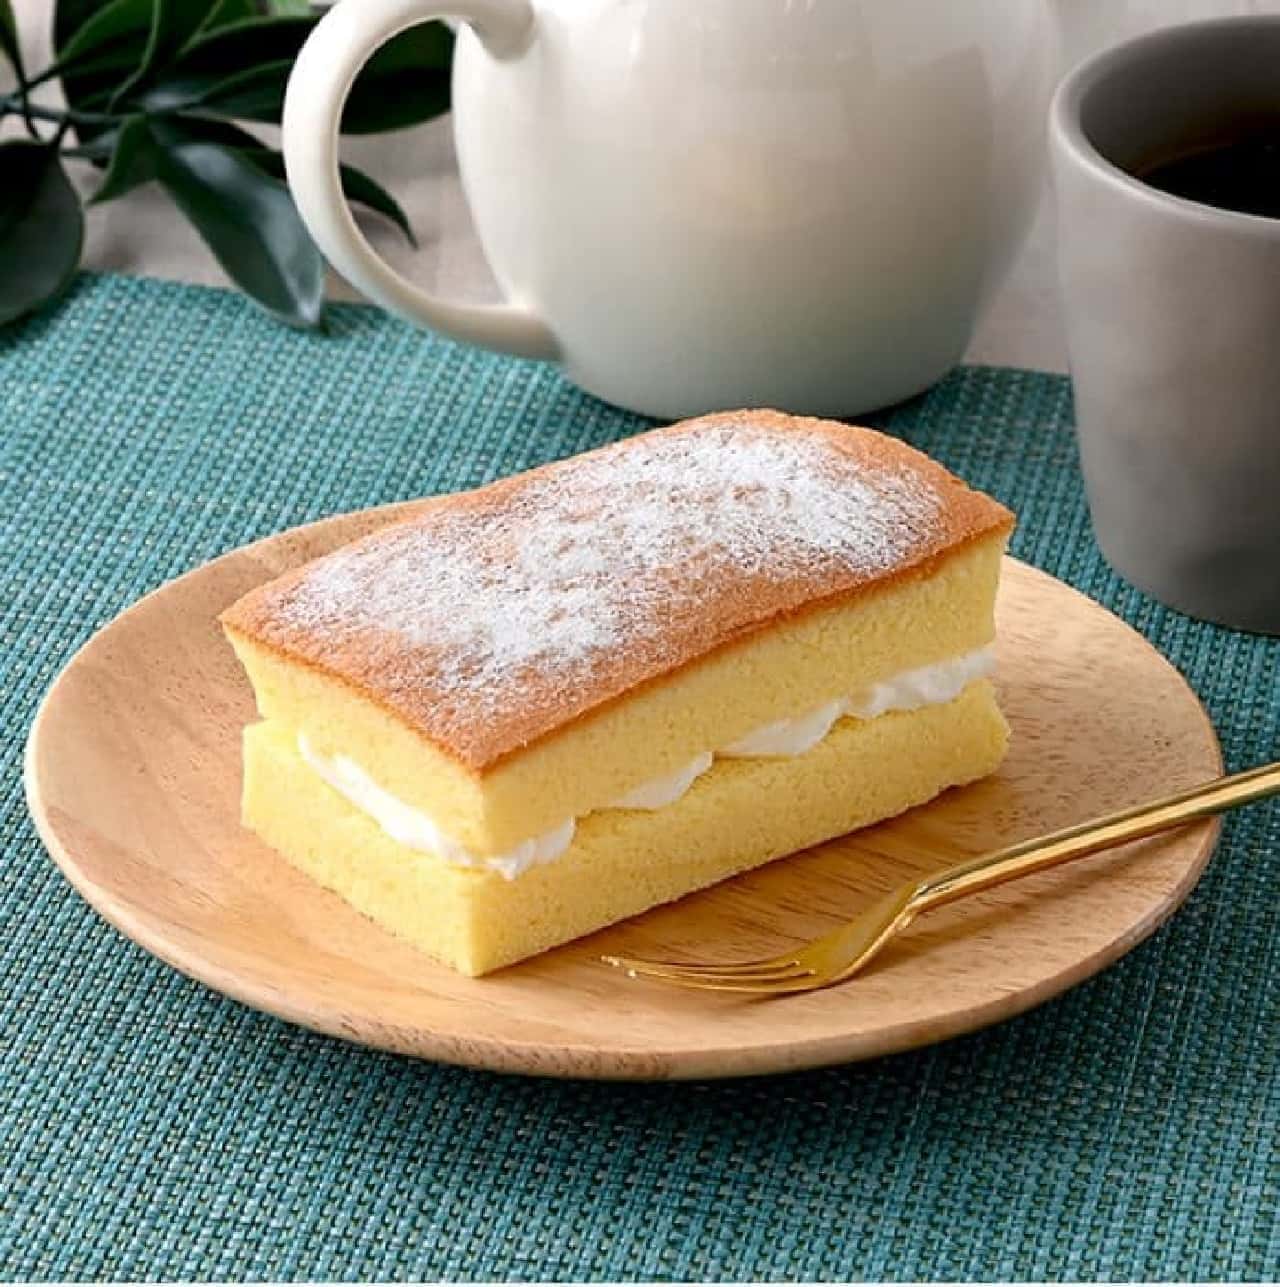 FamilyMart "Taiwanese sponge cake to taste with cream